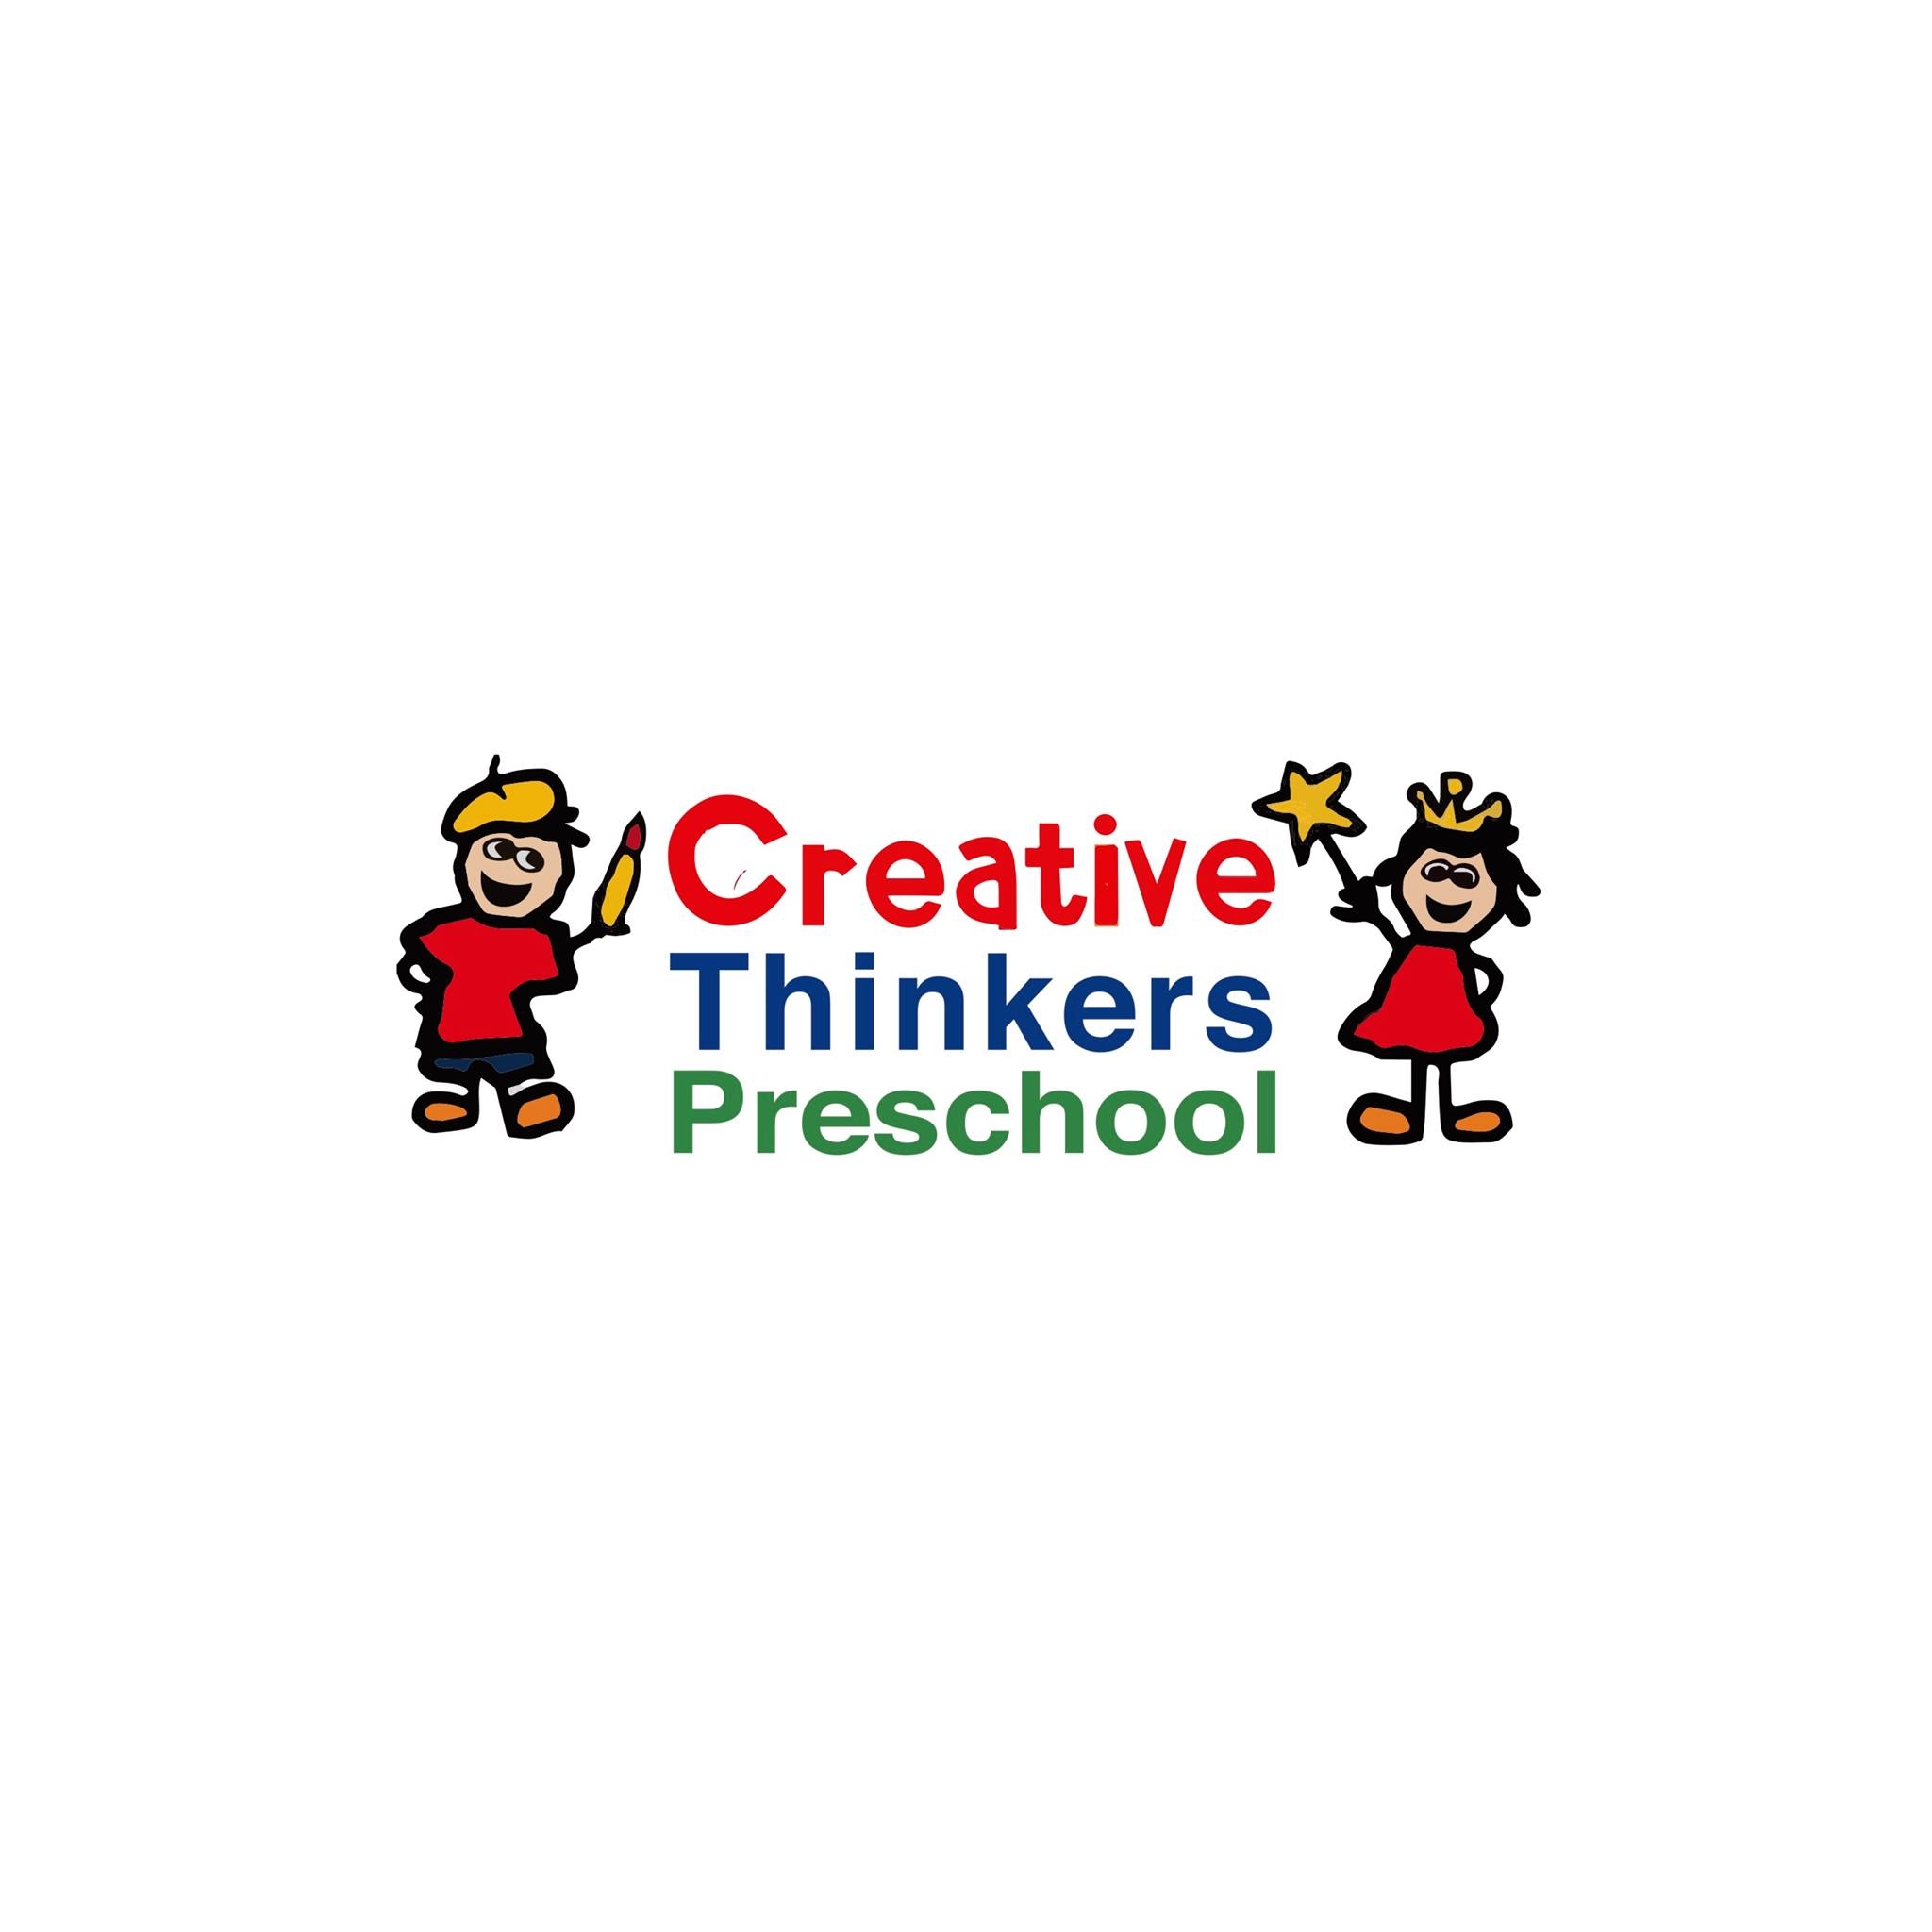 Creative Thinkers Preschool @ Jurong Kechil